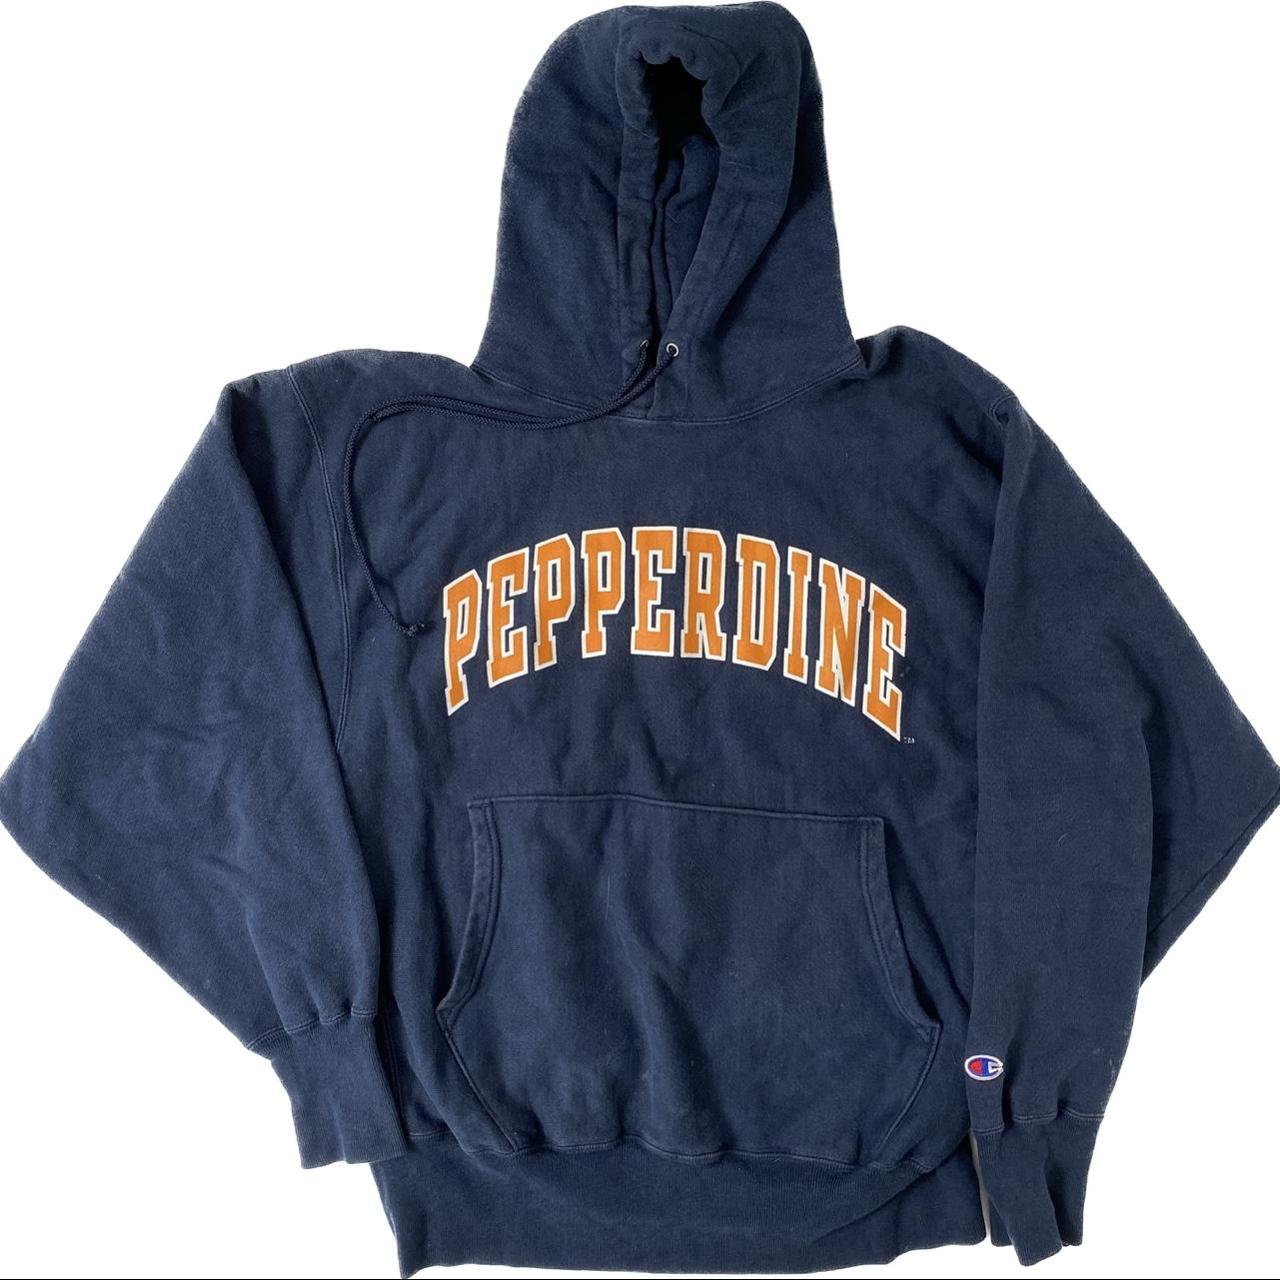 Vintage Pepperdine University Champion Reverse Weave... - Depop